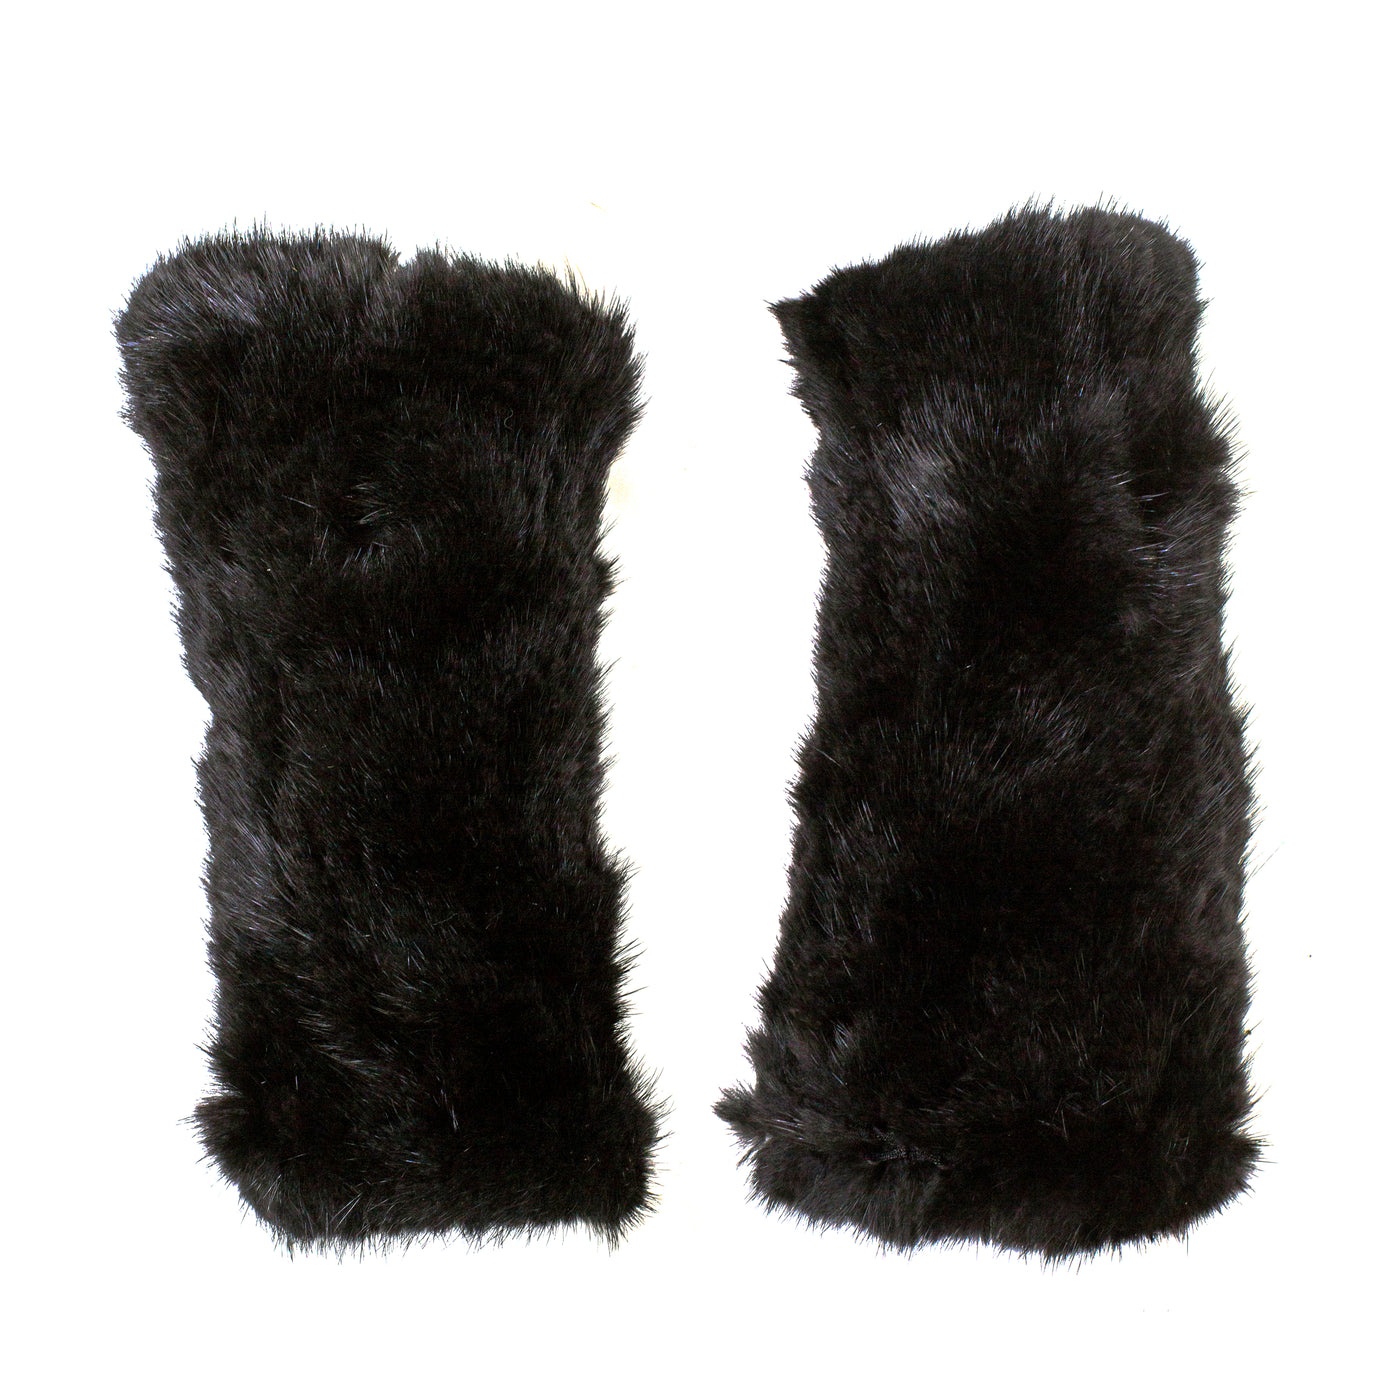 Mink Fingerless Gloves-Women's Accessories-Kevin's Fine Outdoor Gear & Apparel